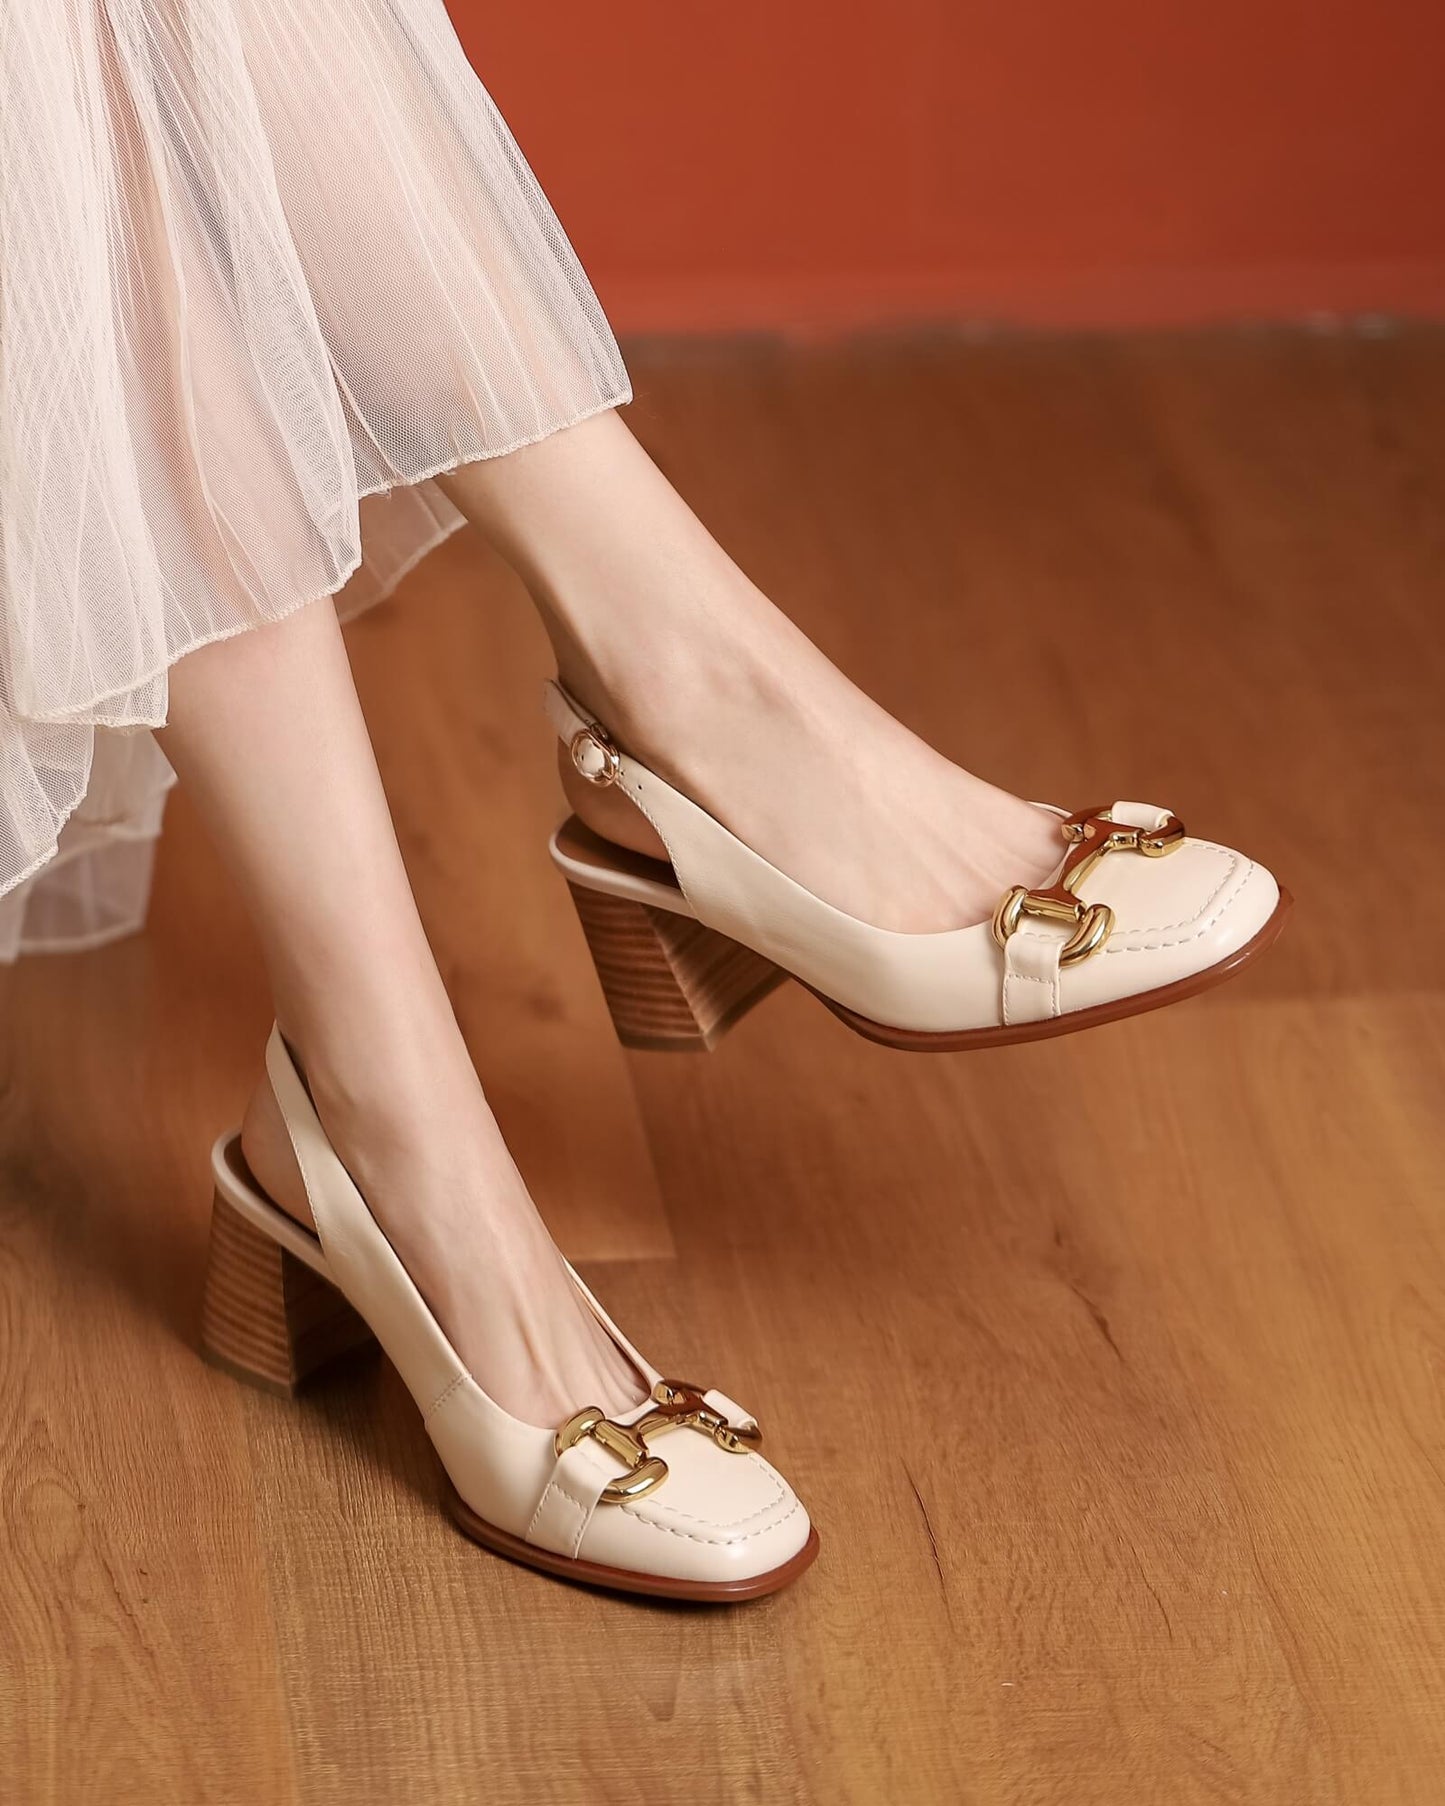 Loa-hardware-slingback-heels-white-leather-model